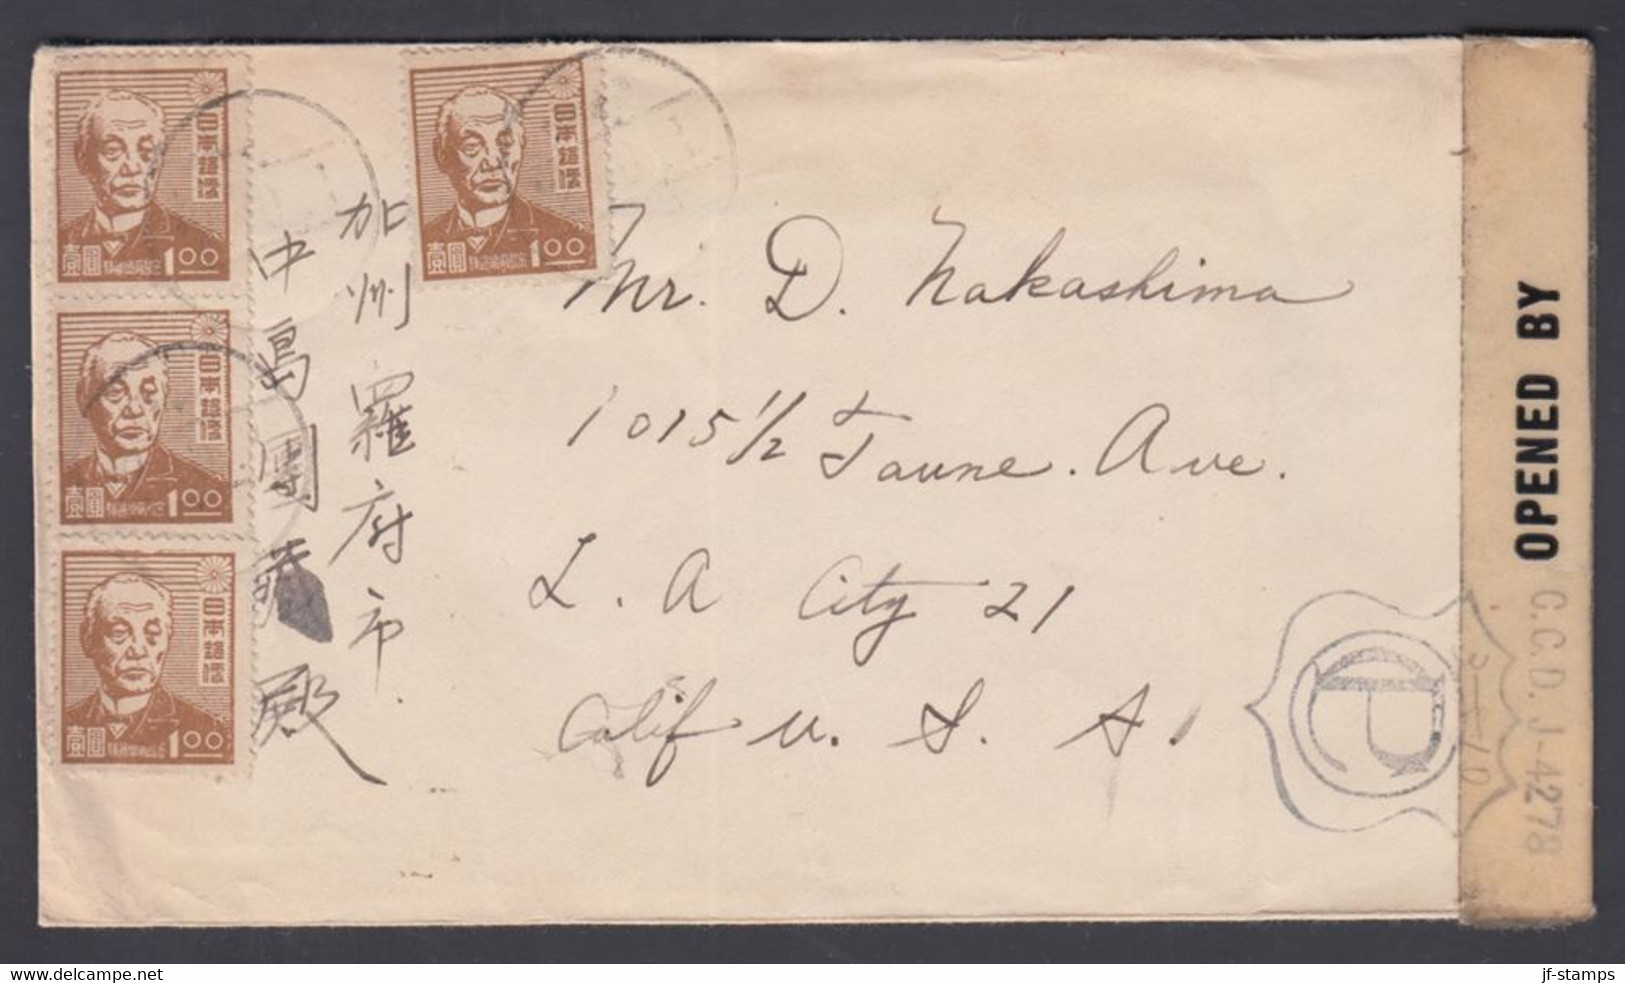 1947. JAPAN 4 Ex 1.00 Y Hisoka On Cover To Los Angeles, Calif. USA. Censor Tape OPENE... (Michel 373) - JF367894 - Storia Postale